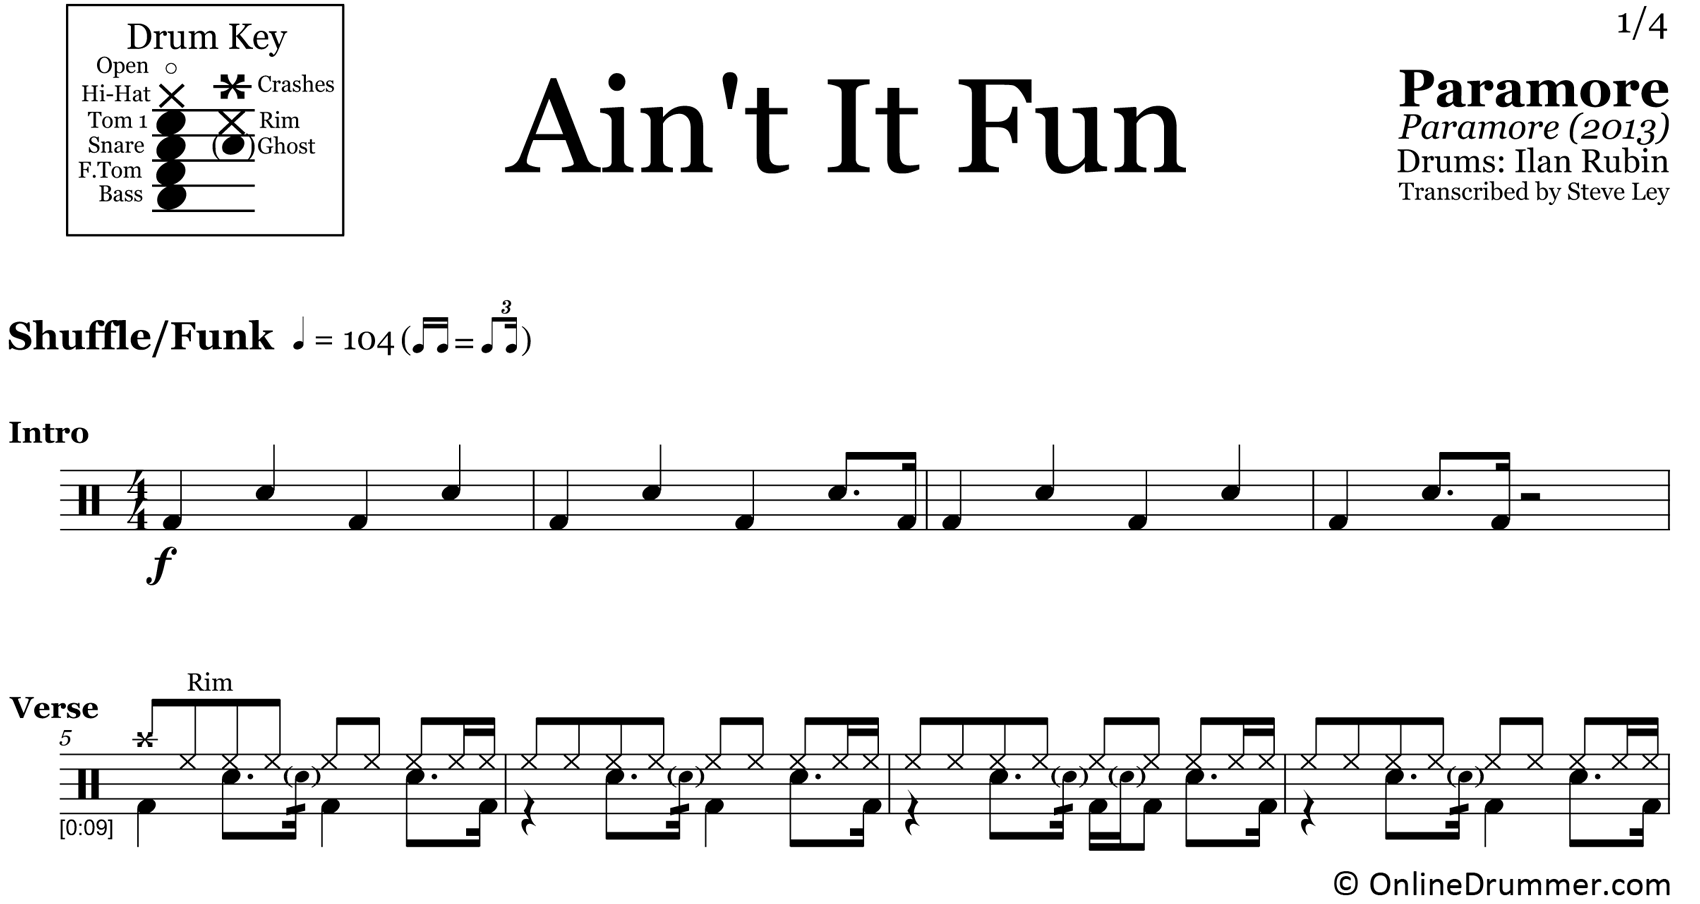 Ain't It Fun - Paramore - Drum Sheet Music